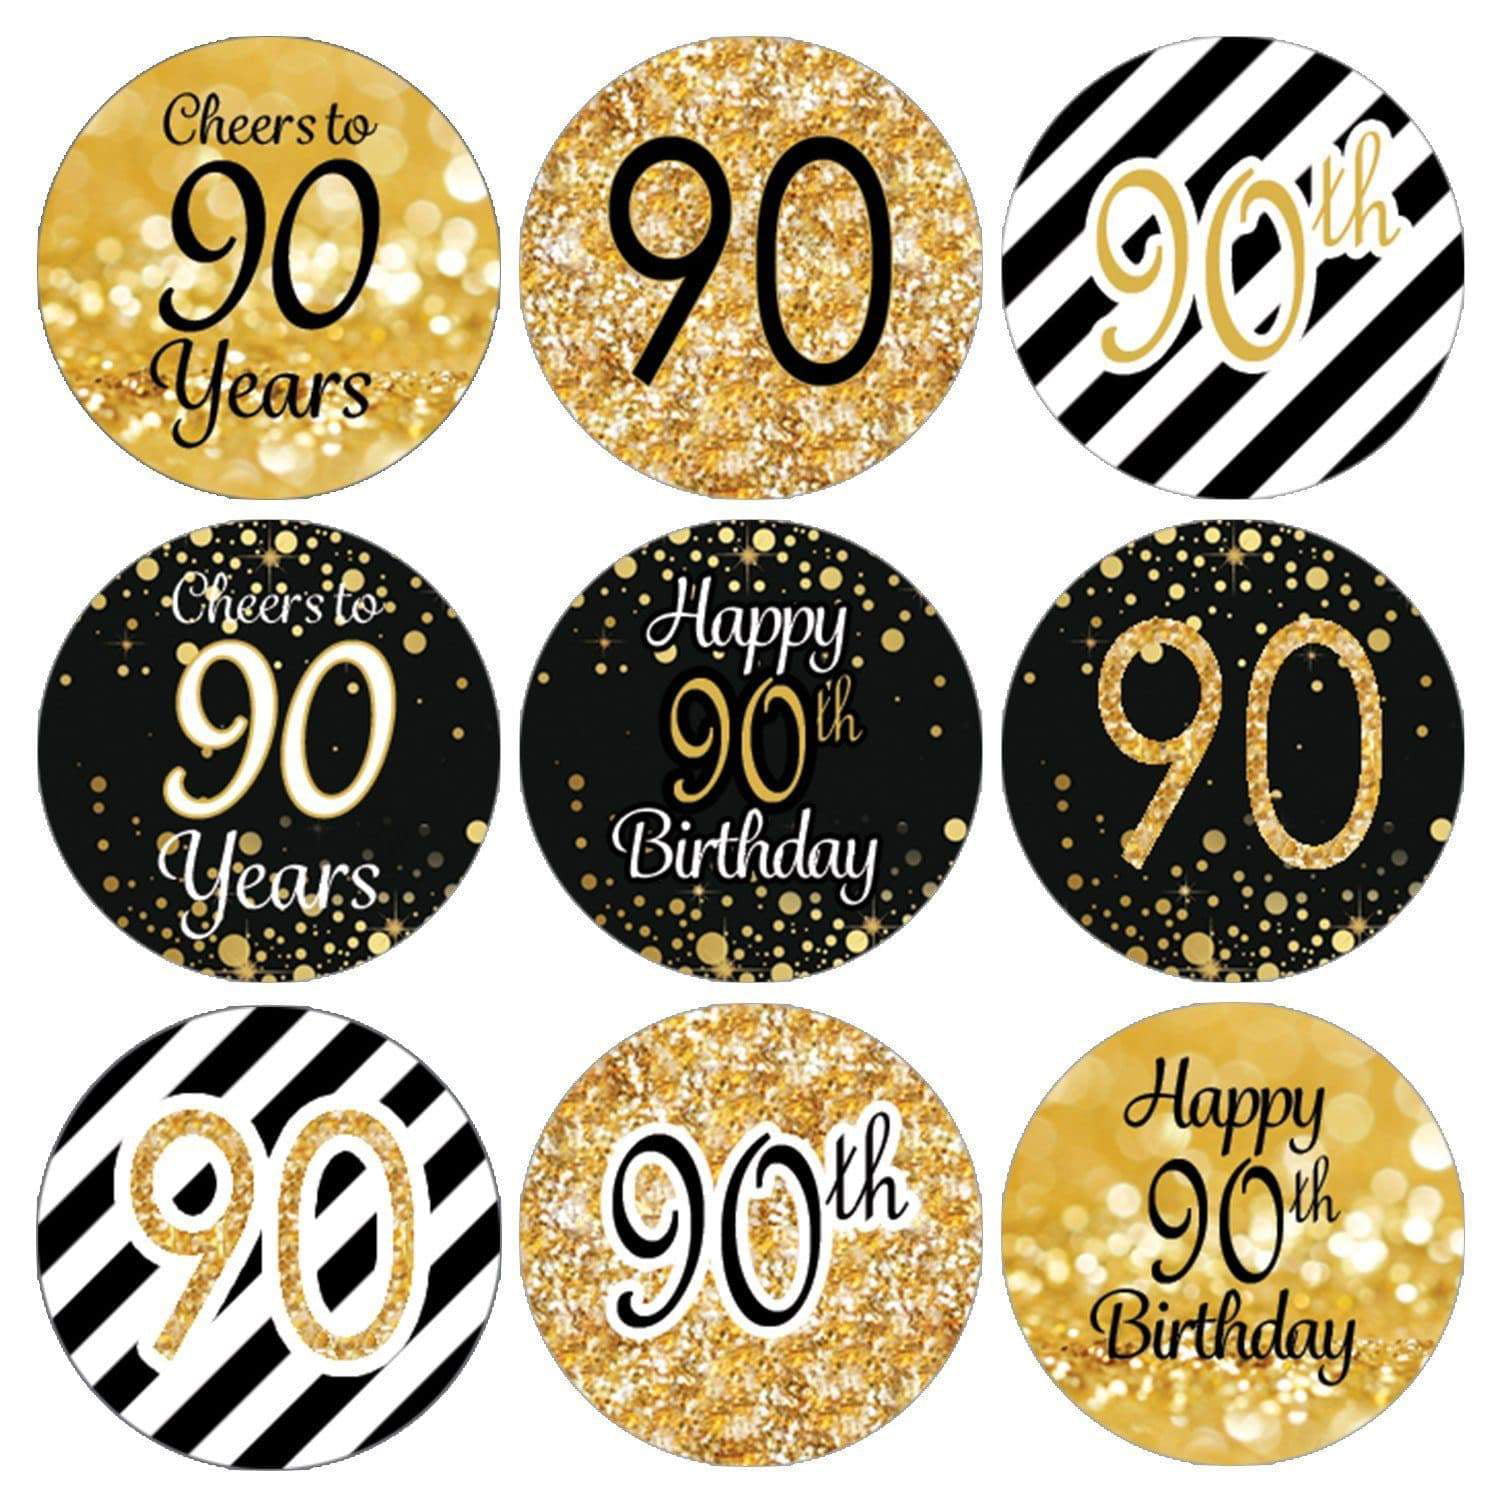 Happy 90th Birthday Sign Hello ninety sign Hello 90 Gold glitter confetti Birthday Party ideas Decorations 90th Anniversary Sign